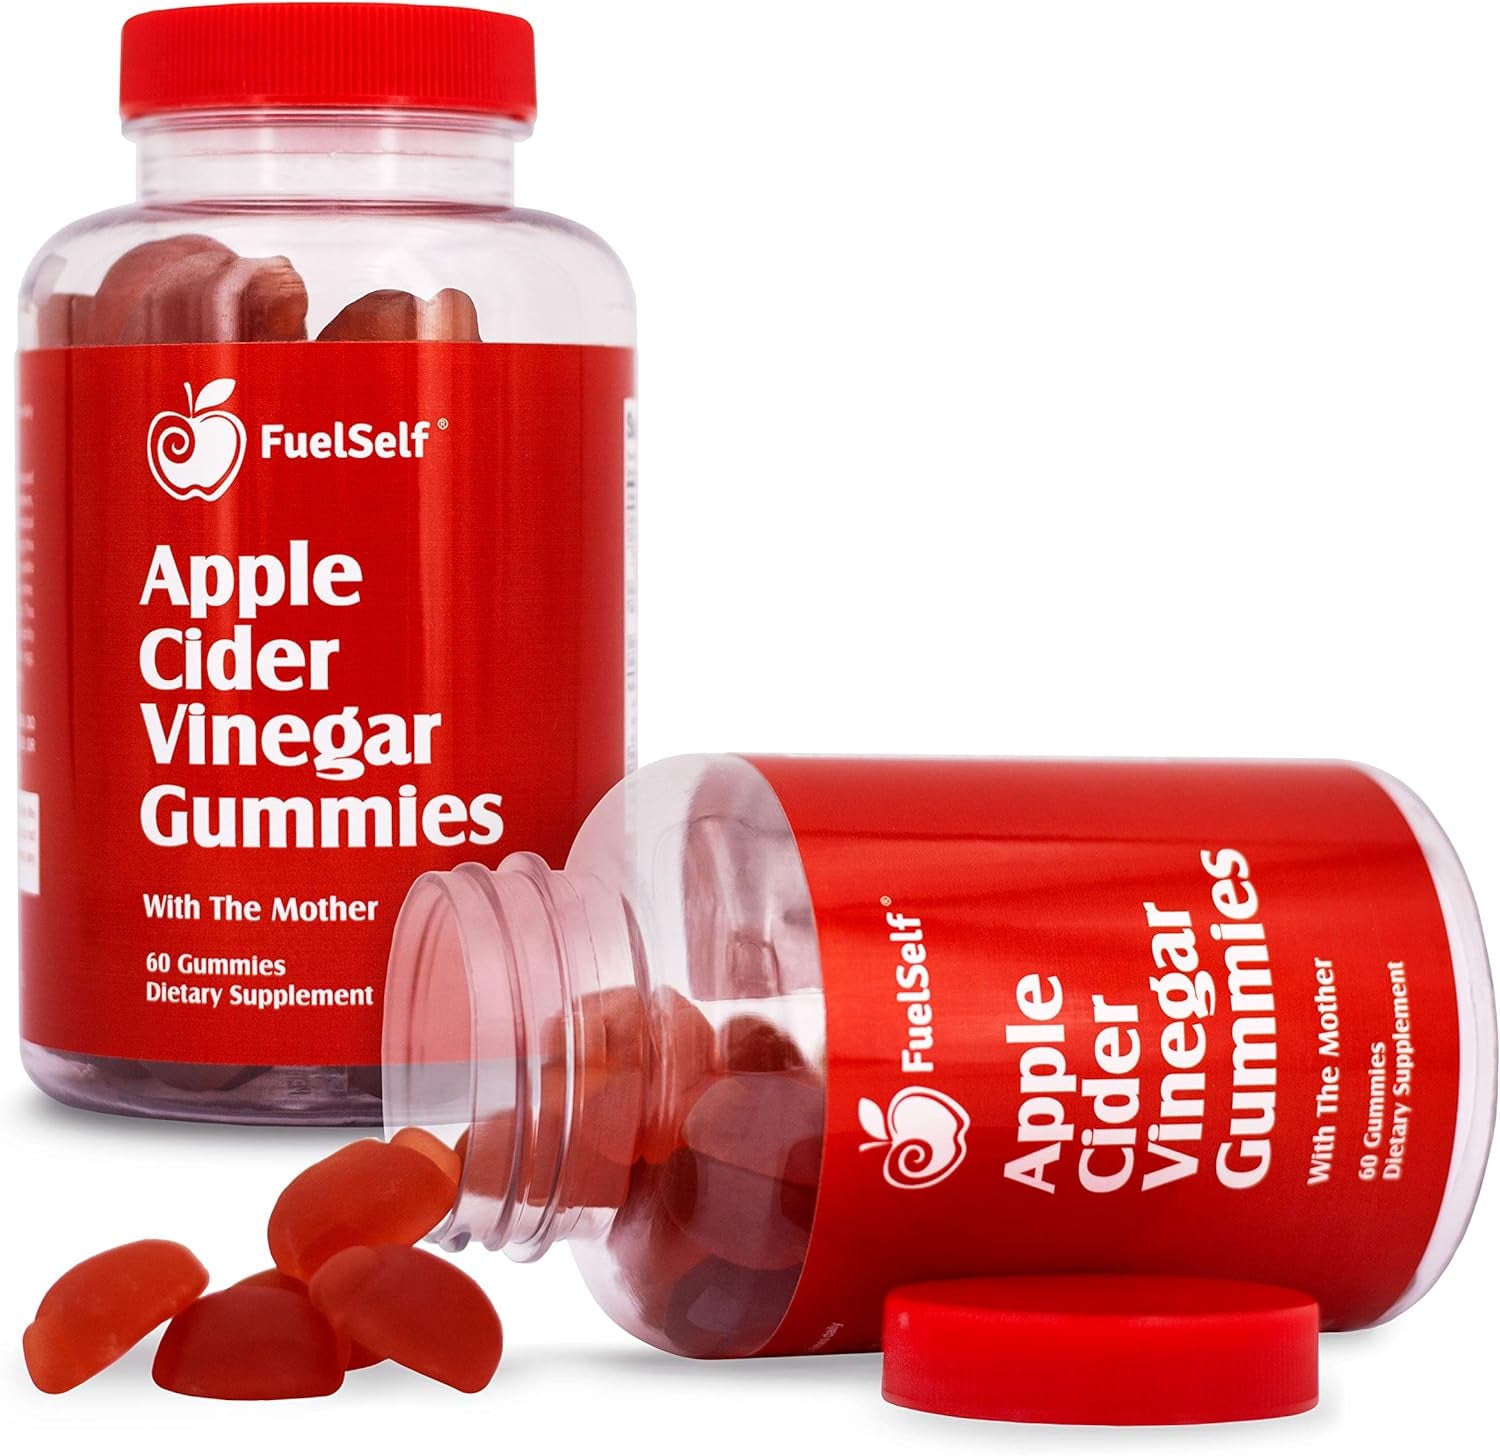 Fuelself Apple Cider Vinegar Gummy Vitamins with the Mother, 1 Pack, 60 Count :: Metabolism Management, Immunity, Detox :: Vegan, Gluten-Free, Vitamin B6, B12, Pomegranate, Beet Root